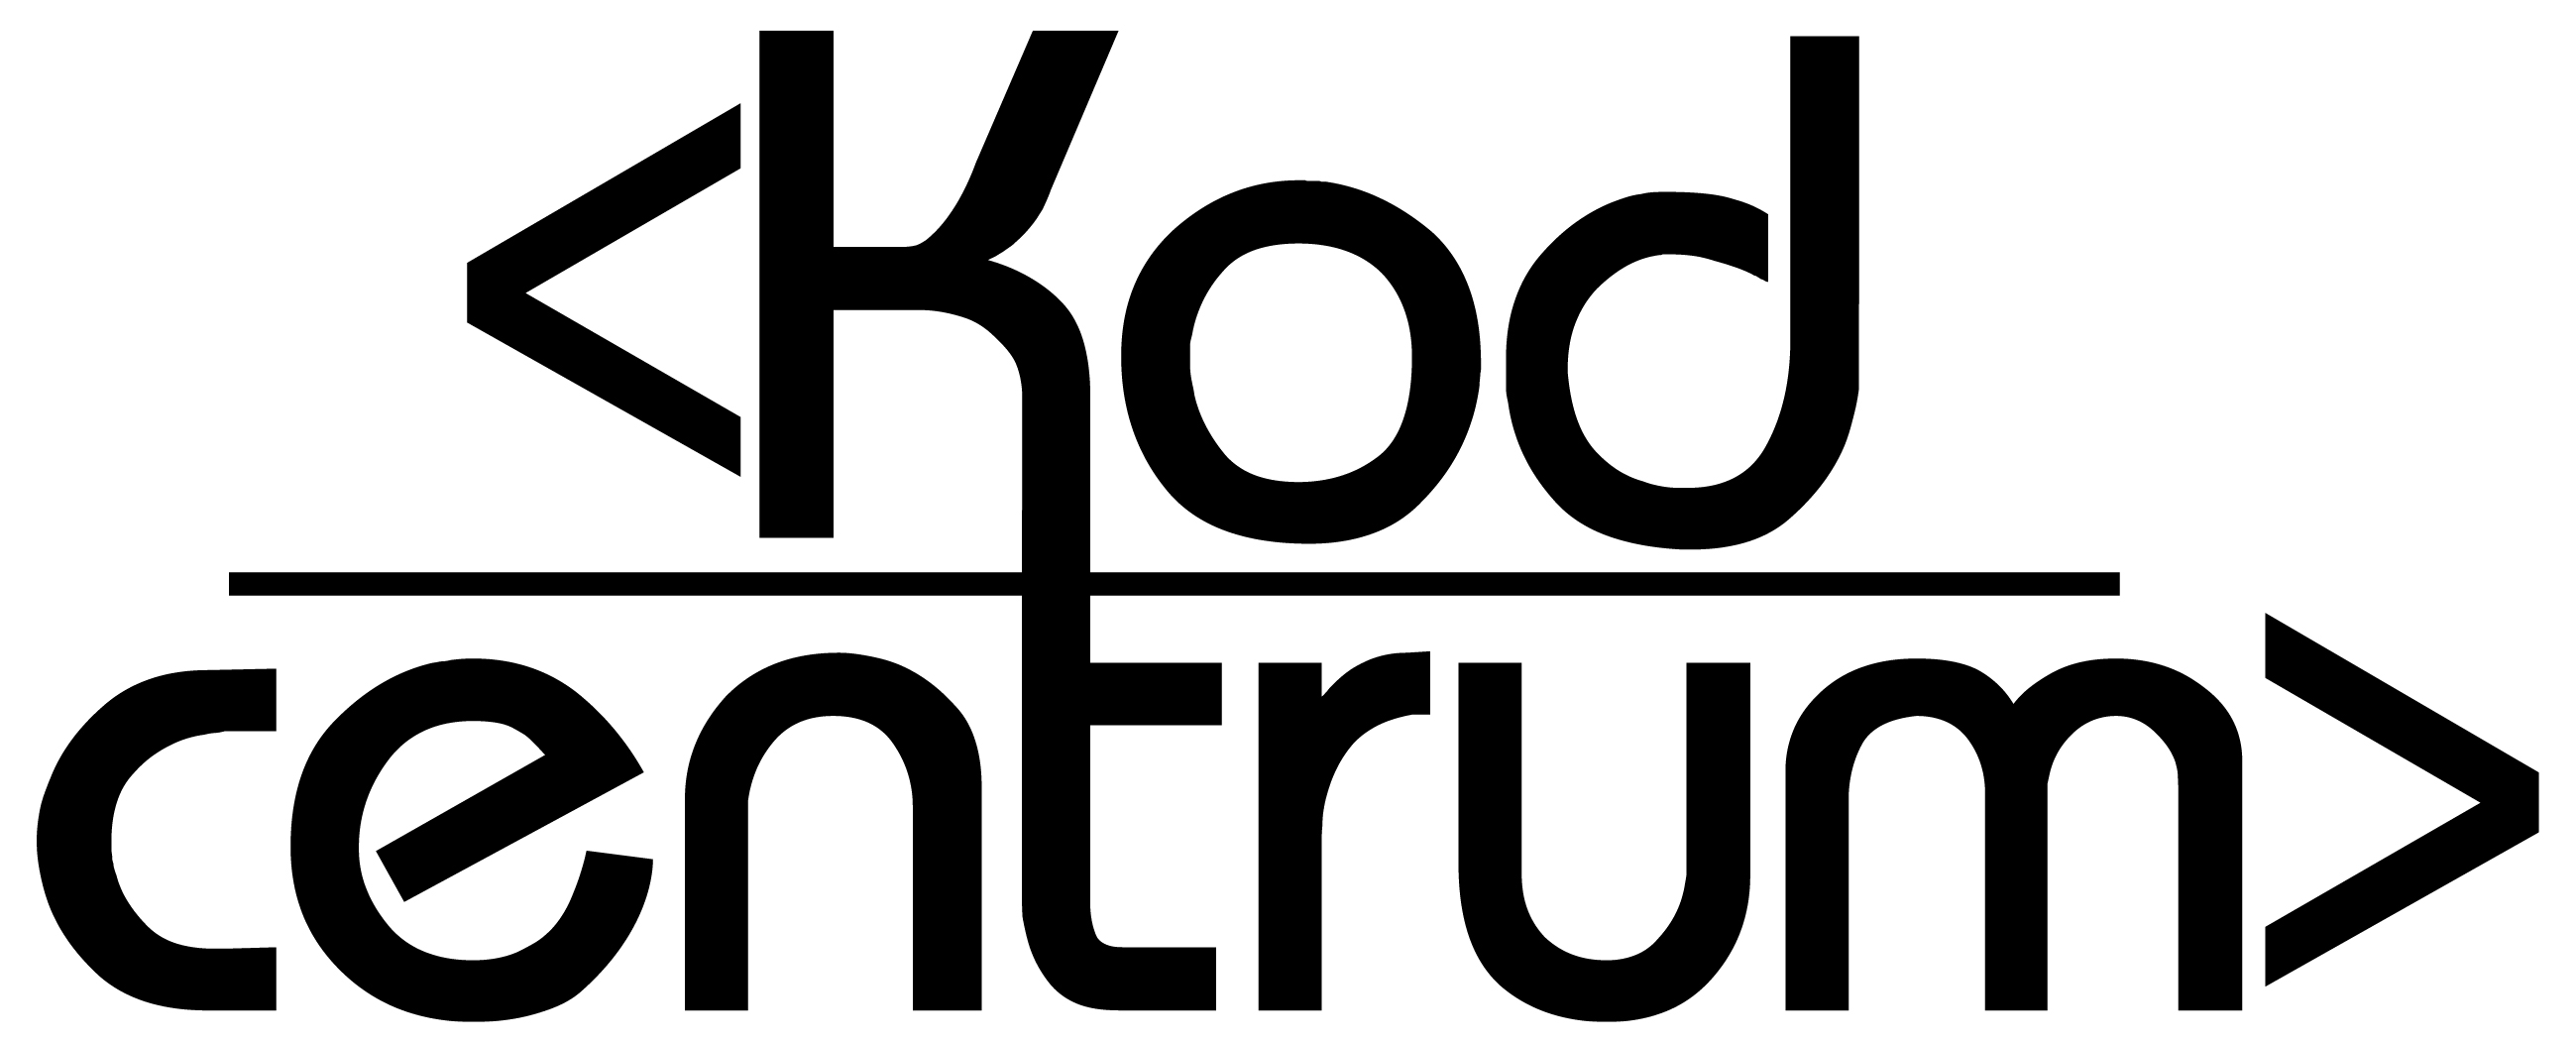 147 Kodcentrum logo